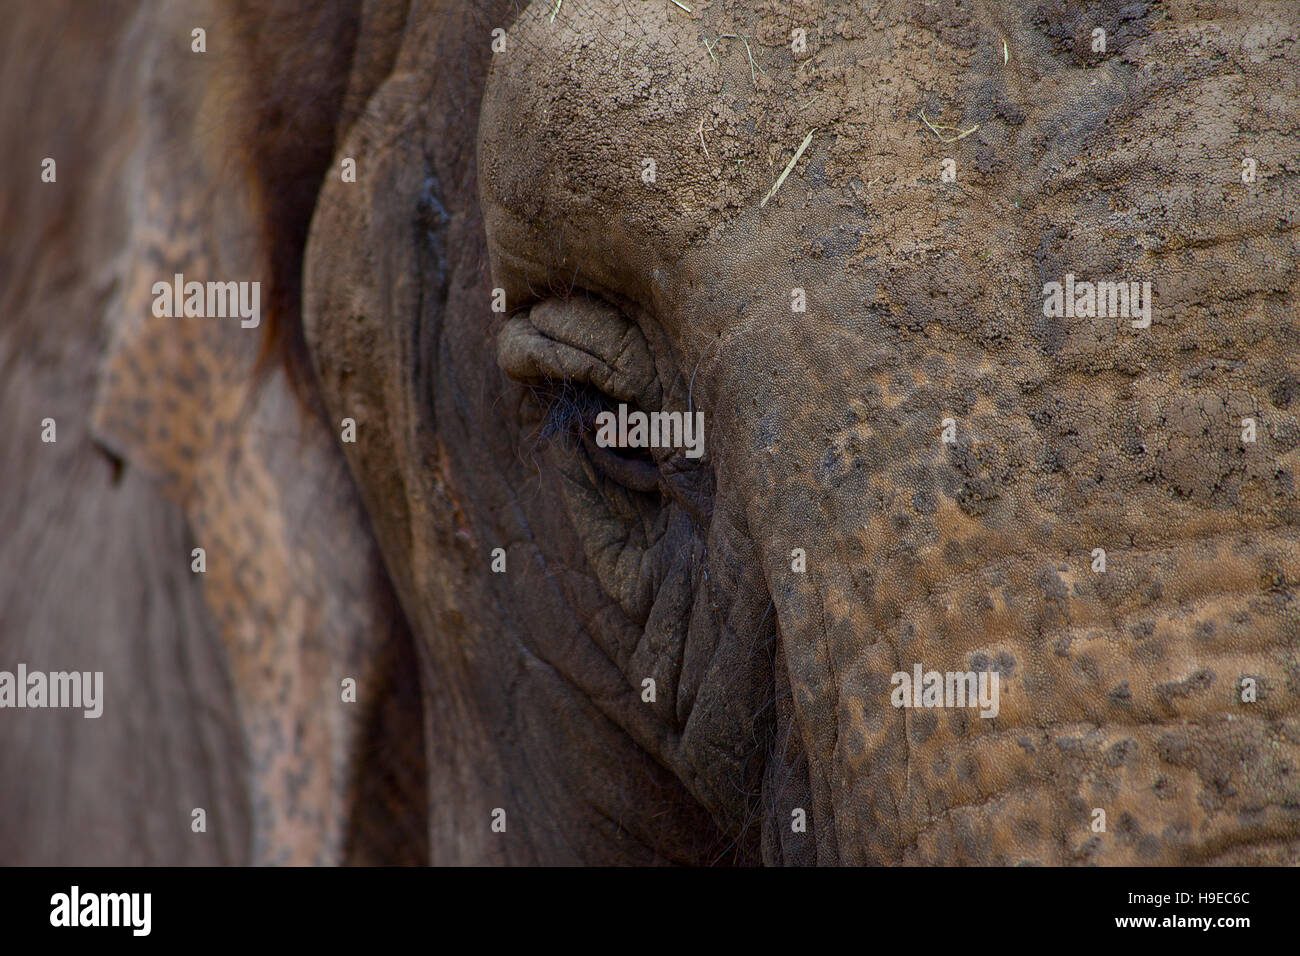 Detailed elephant head and eye Stock Photo